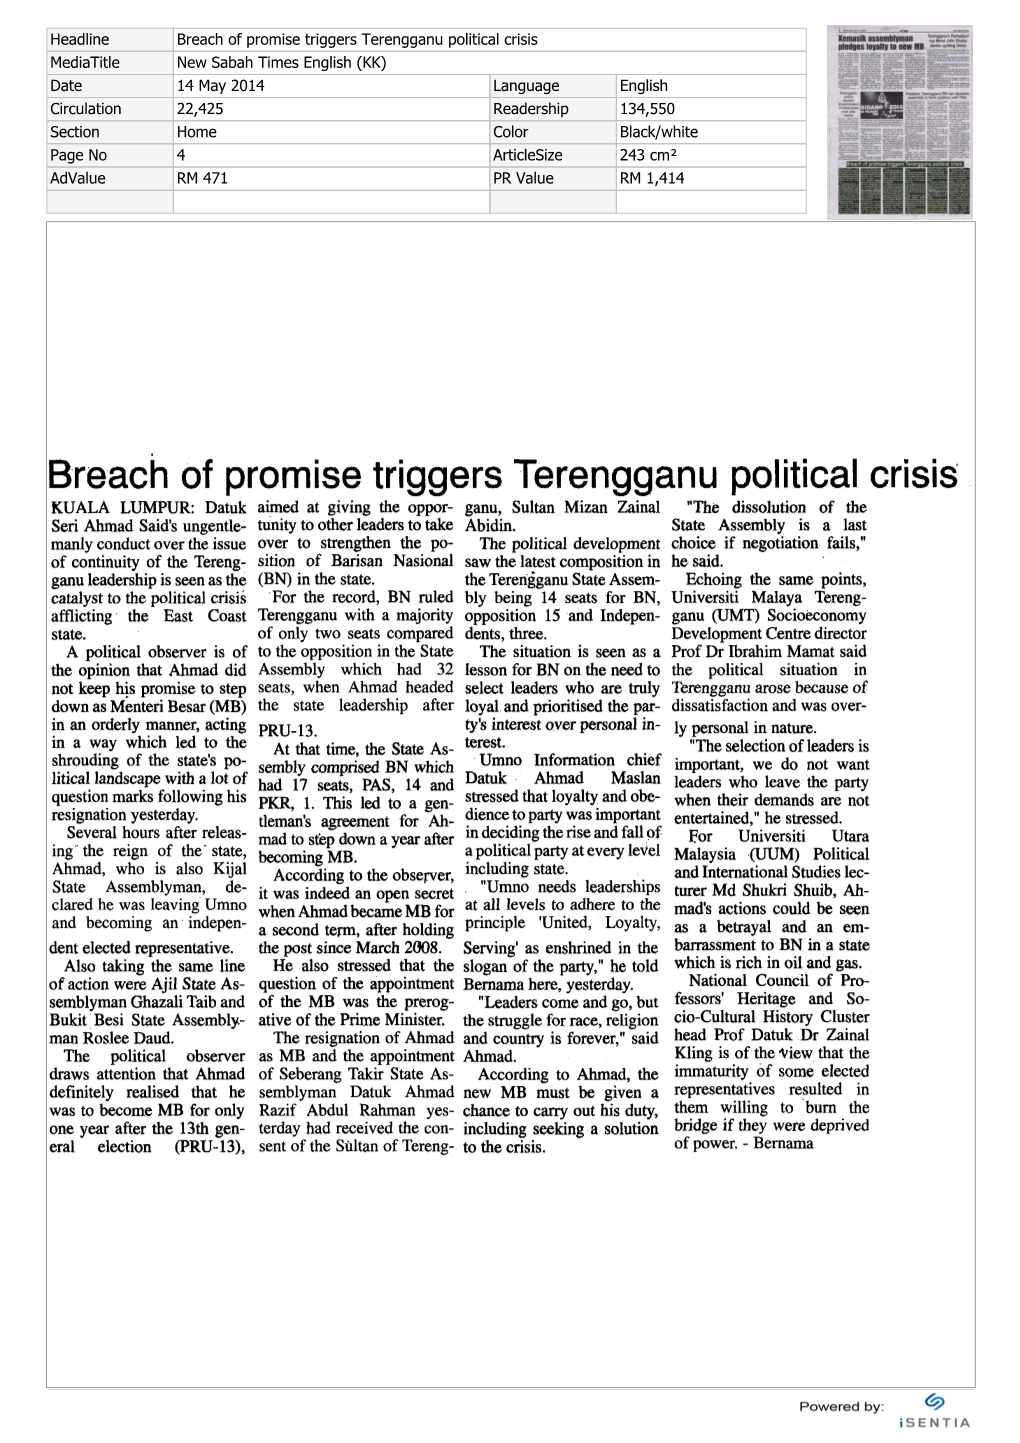 Breach of Promise Triggers Terengganu Political Crisis